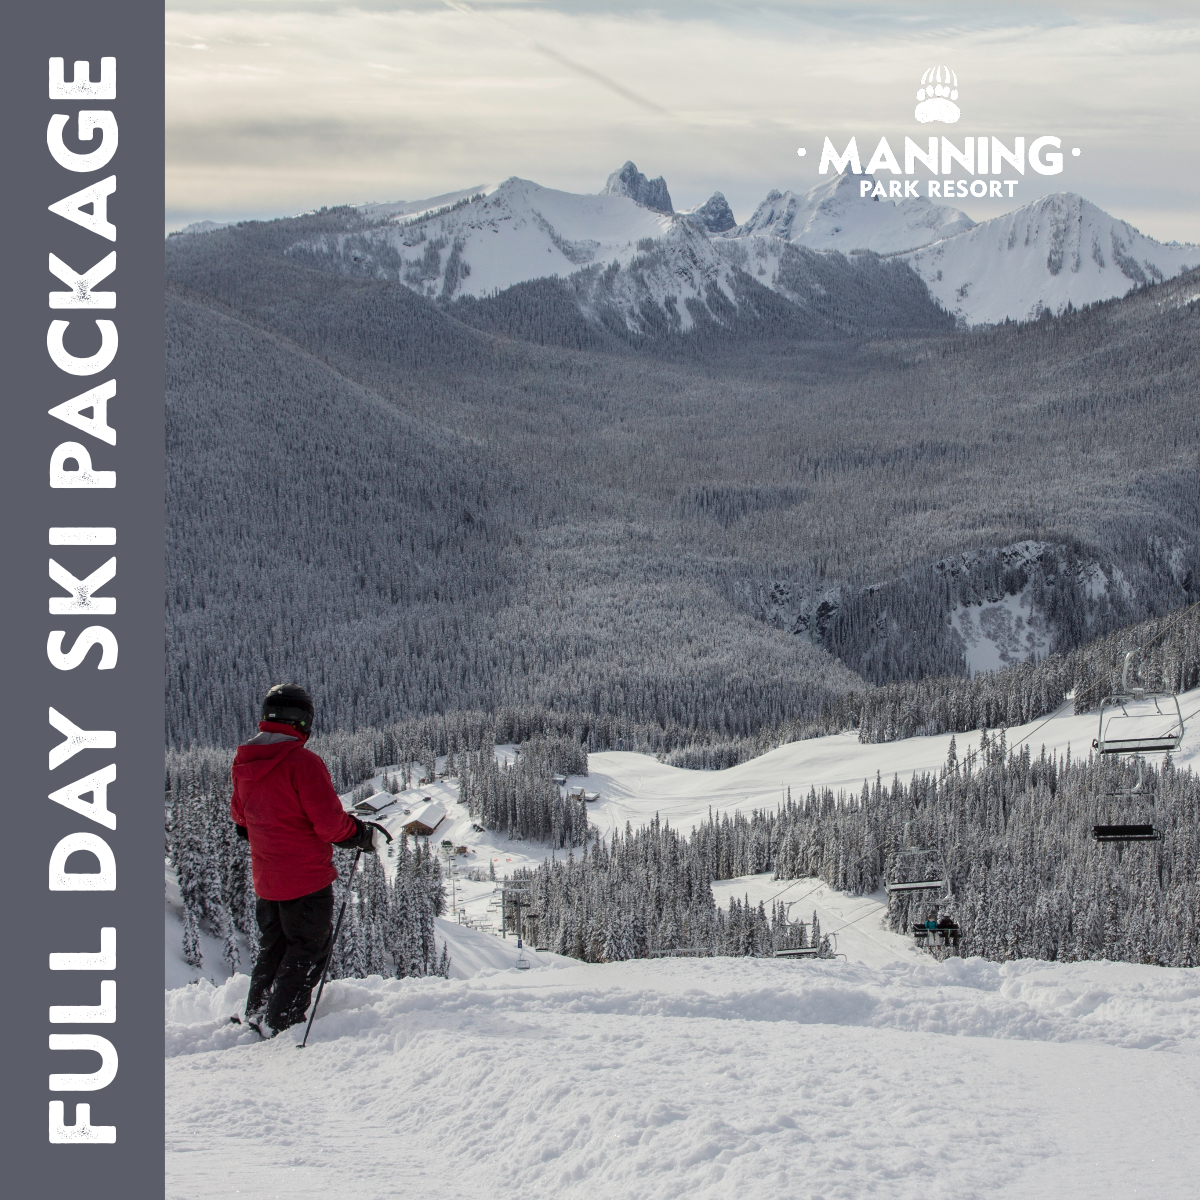 Full Day Ski Rental Package